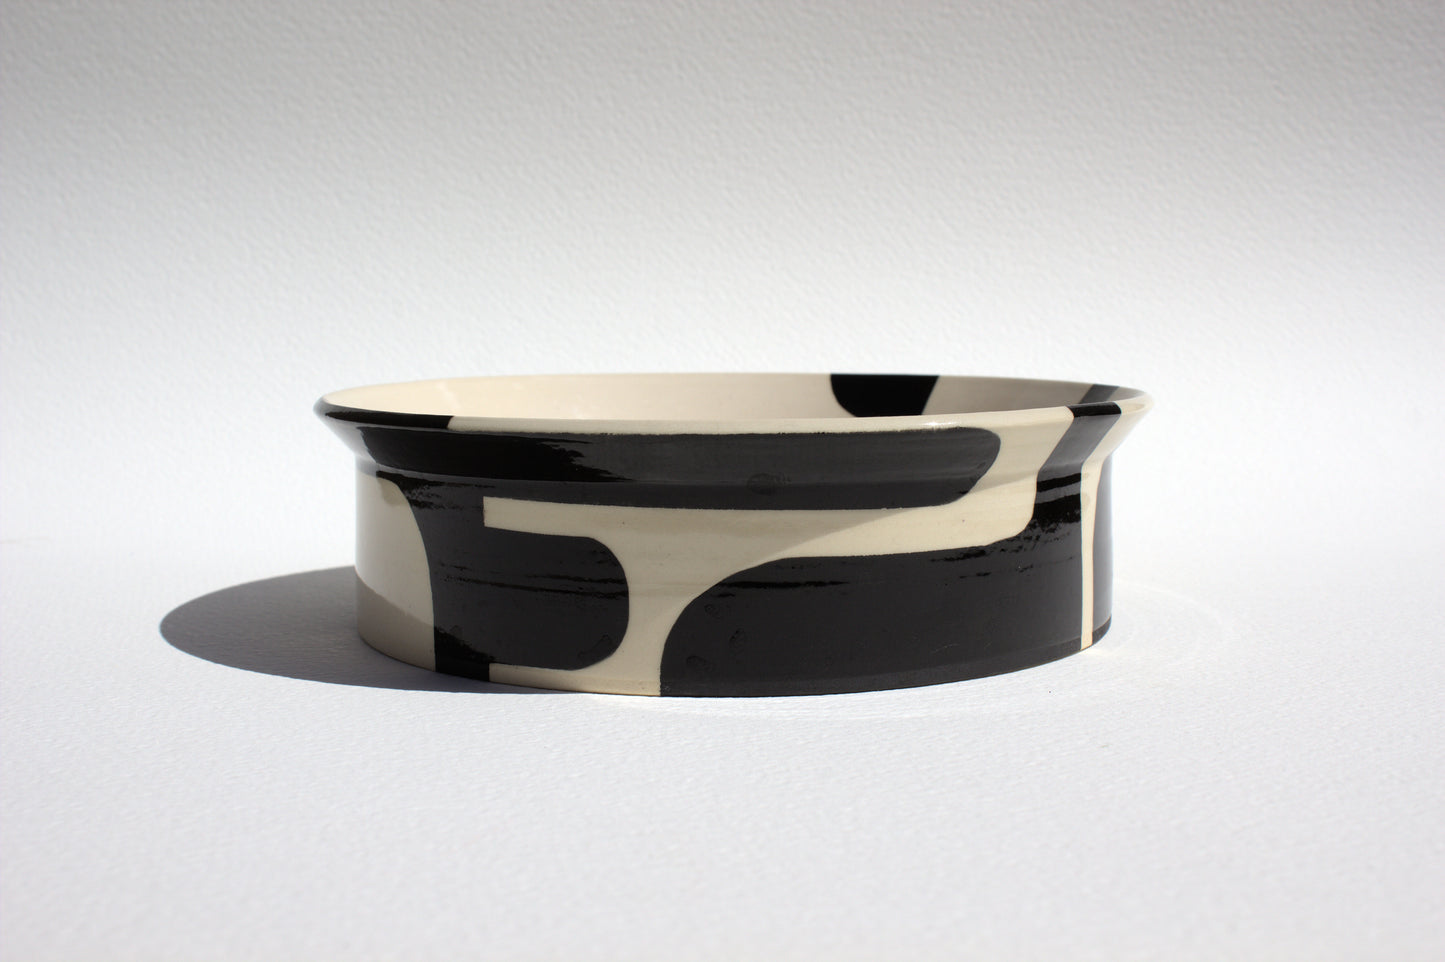 Black Design Bowl - Low